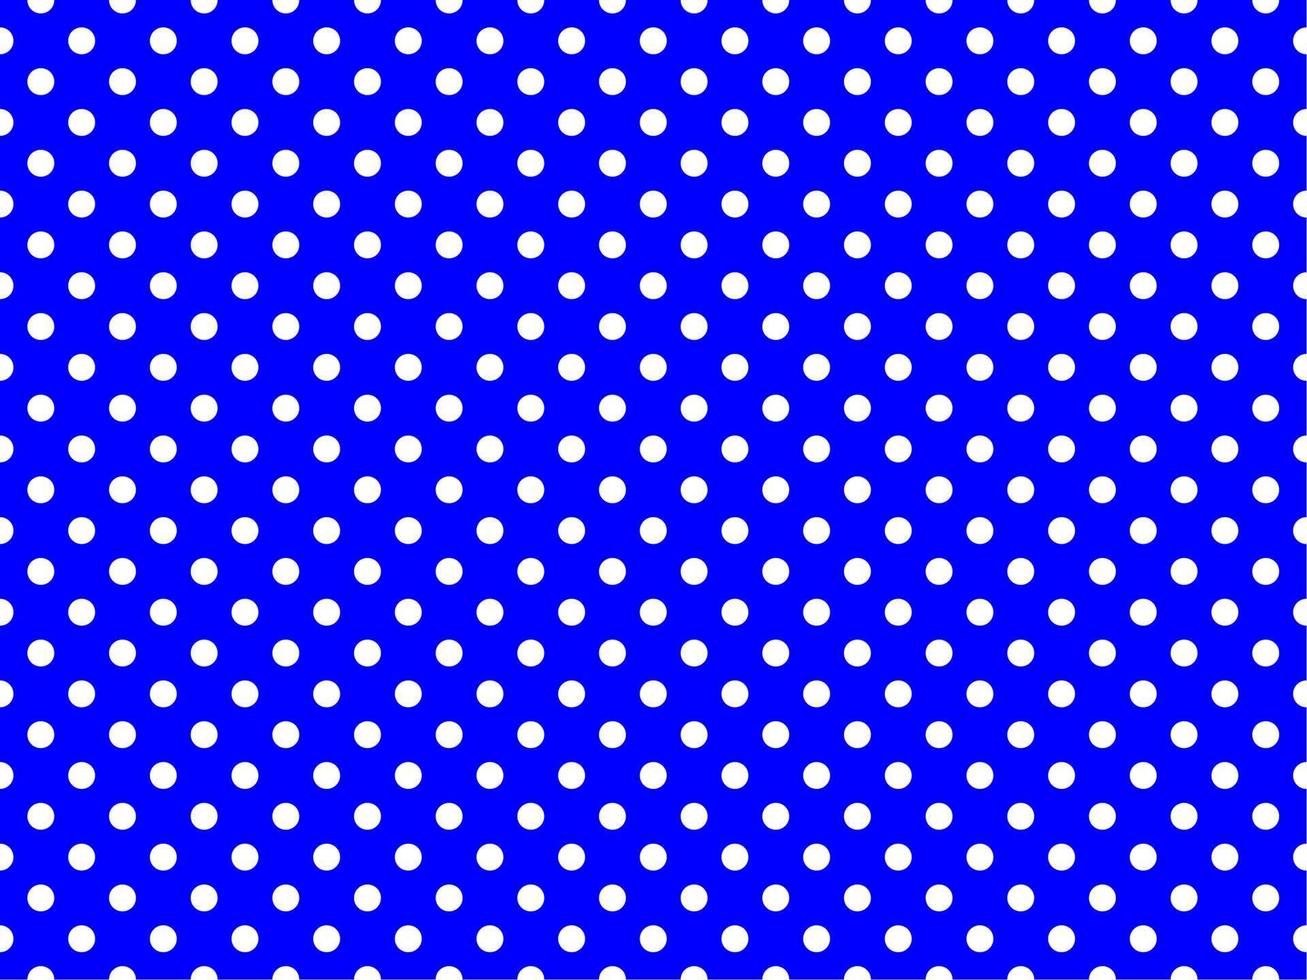 bianca polka puntini al di sopra di blu sfondo vettore